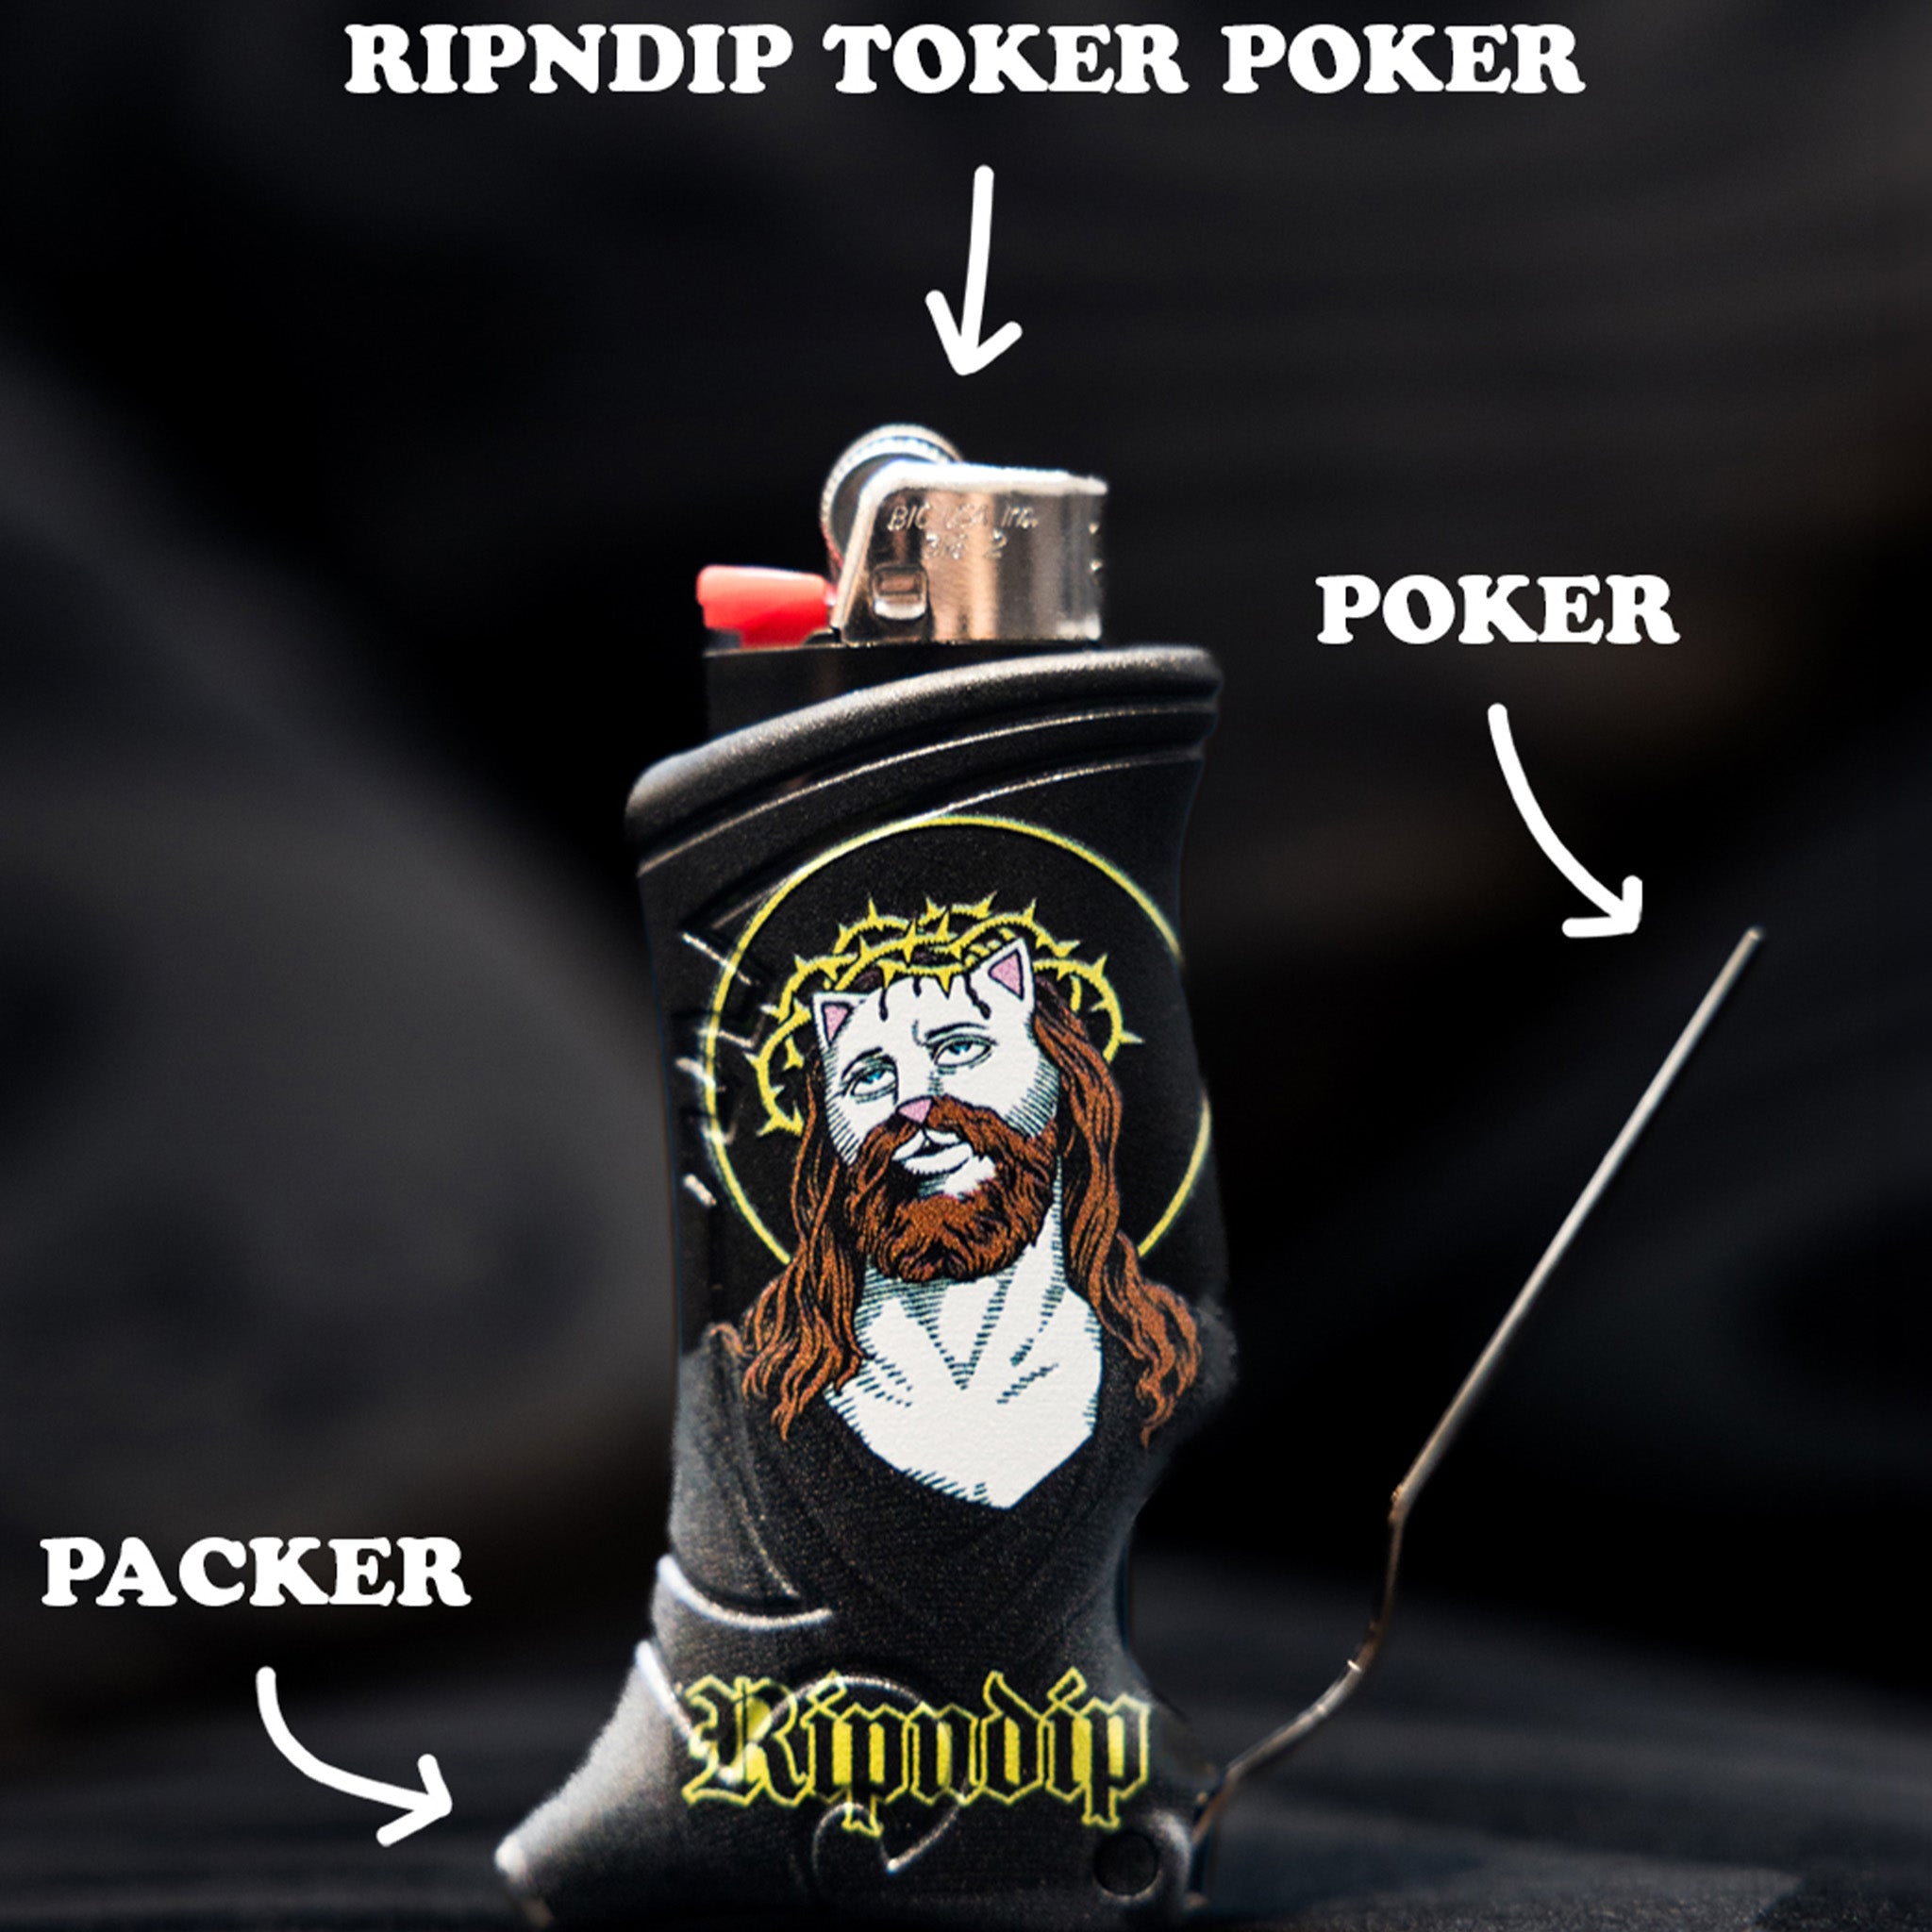 Psychedelic Toker Poker – RIPNDIP